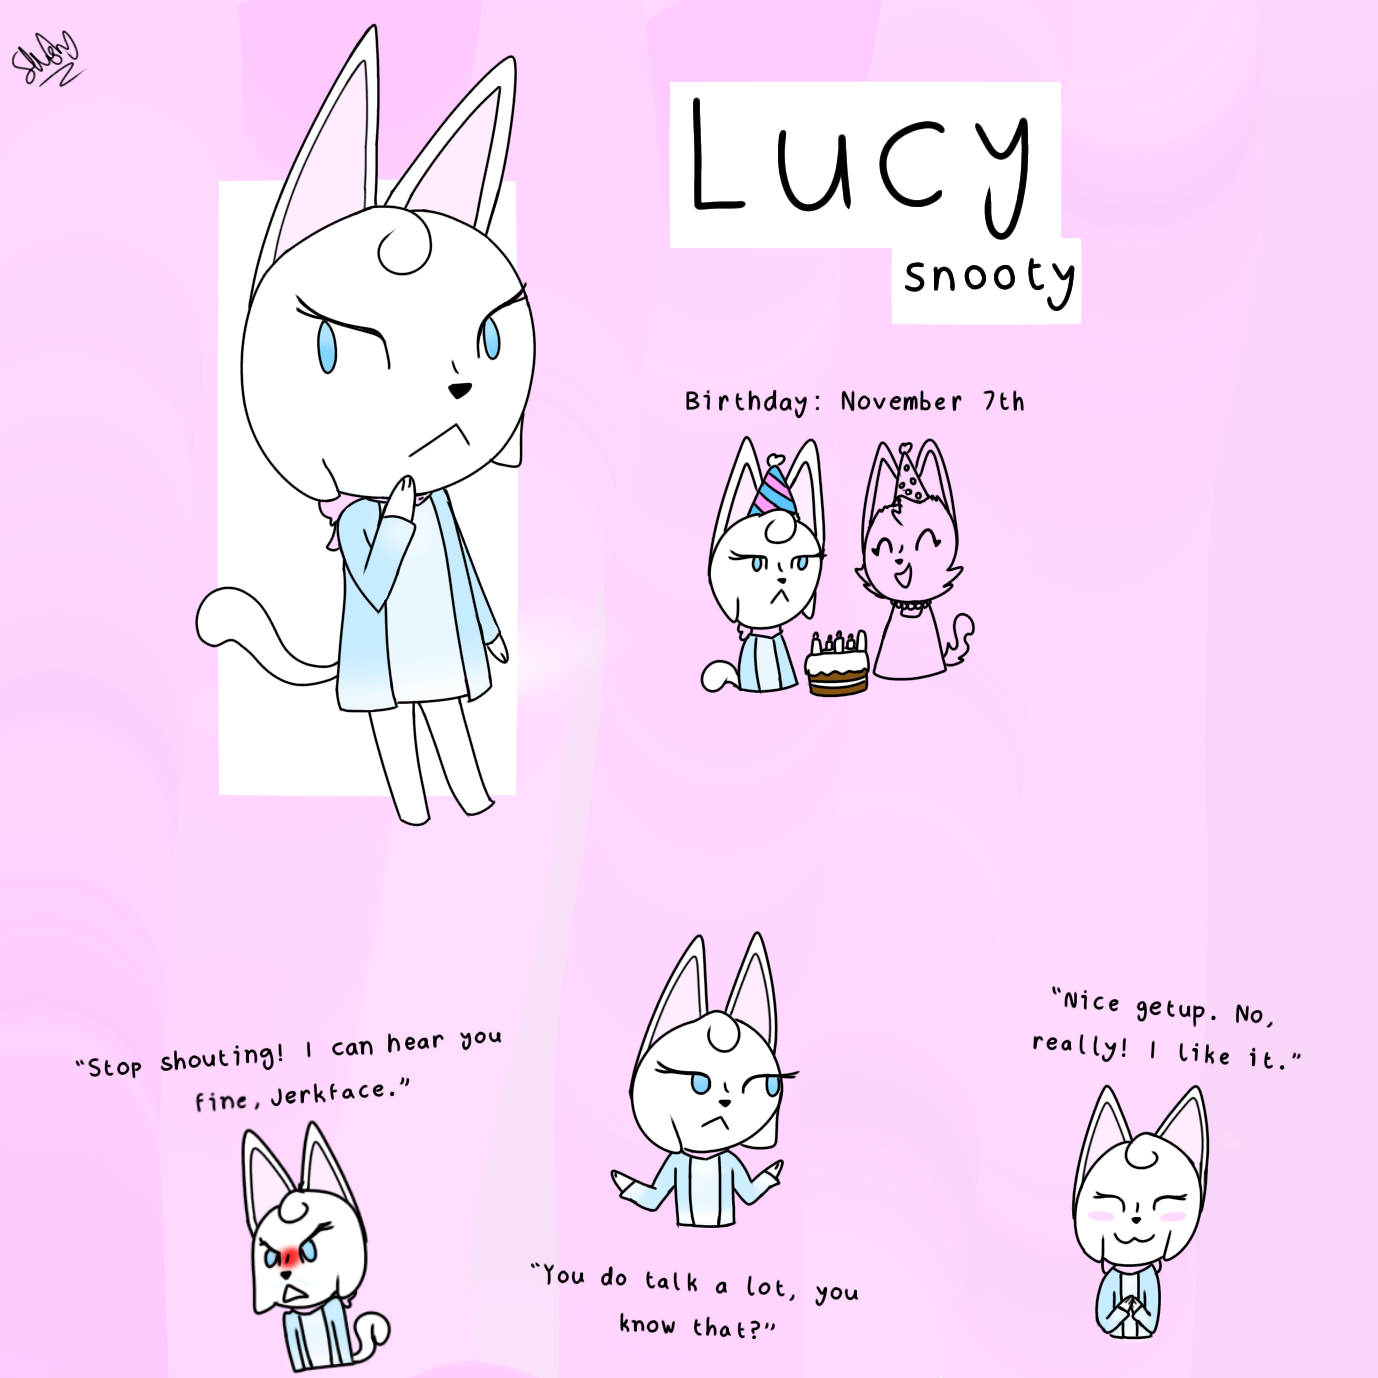 Candybooru image #15252, tagged with Daisy Lucy Slushytheplushy1_(Artist) parody